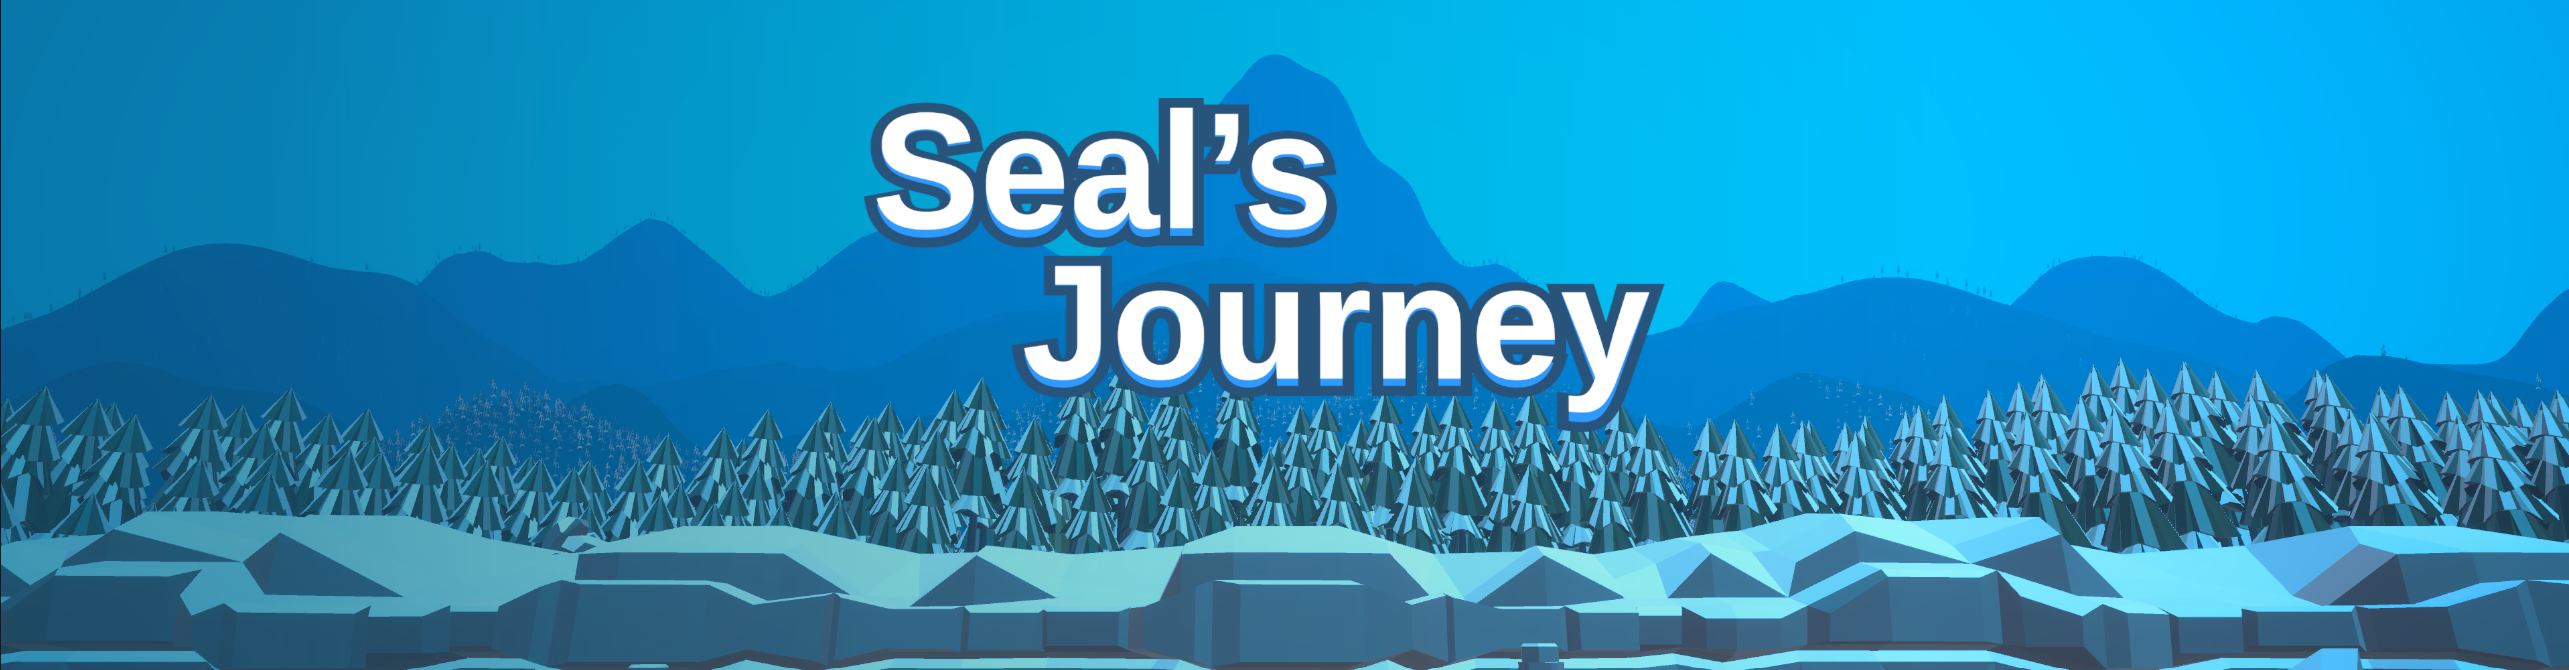 Seal's Journey